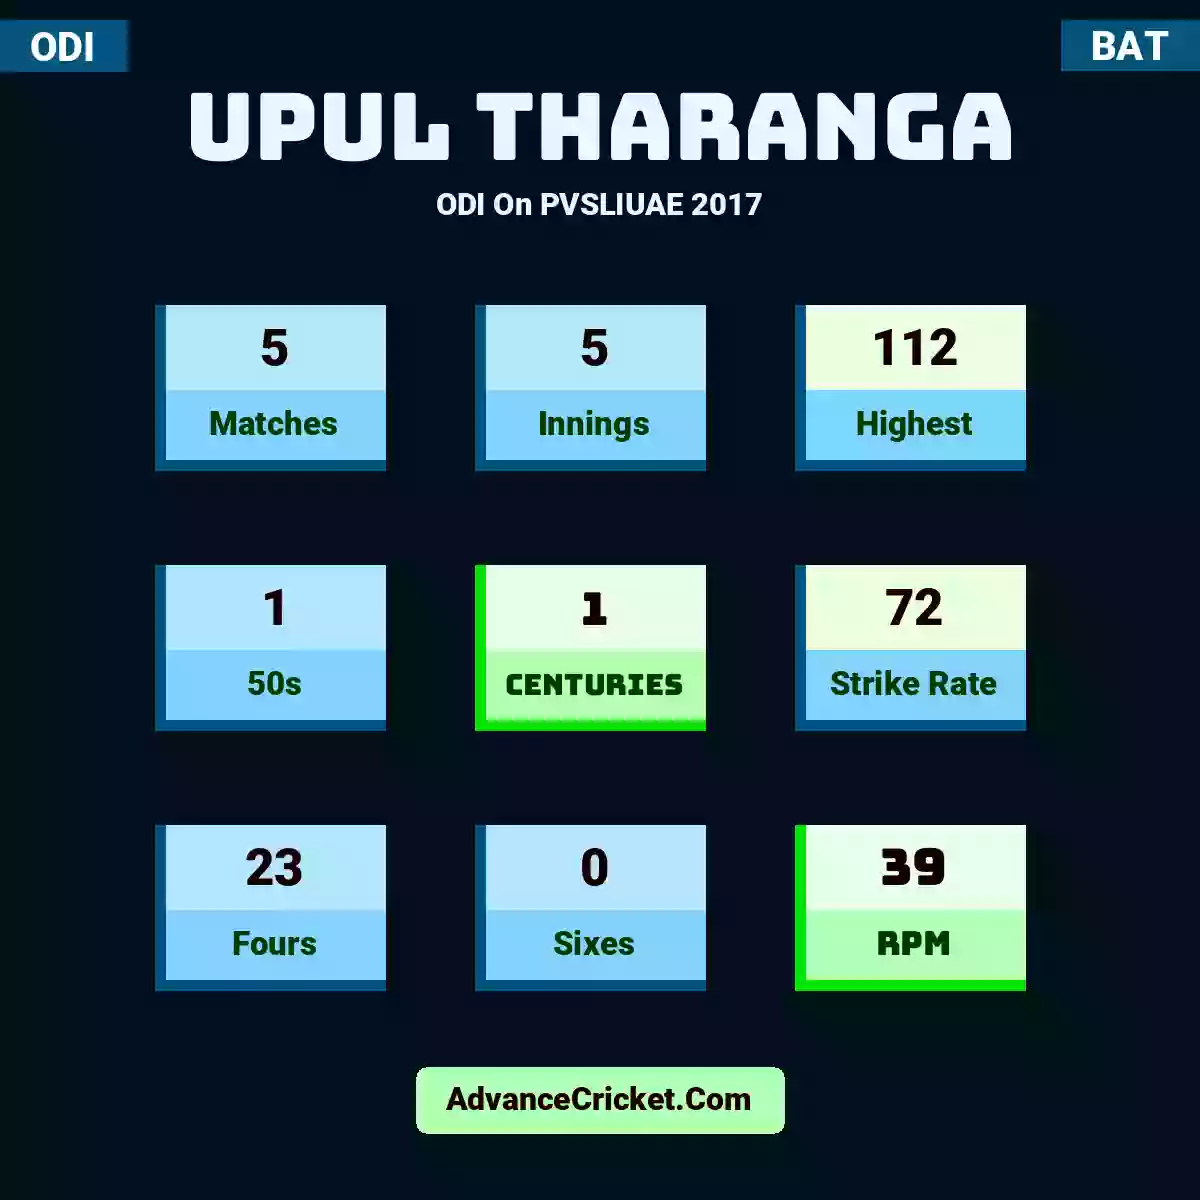 Upul Tharanga ODI  On PVSLIUAE 2017, Upul Tharanga played 5 matches, scored 112 runs as highest, 1 half-centuries, and 1 centuries, with a strike rate of 72. U.Tharanga hit 23 fours and 0 sixes, with an RPM of 39.